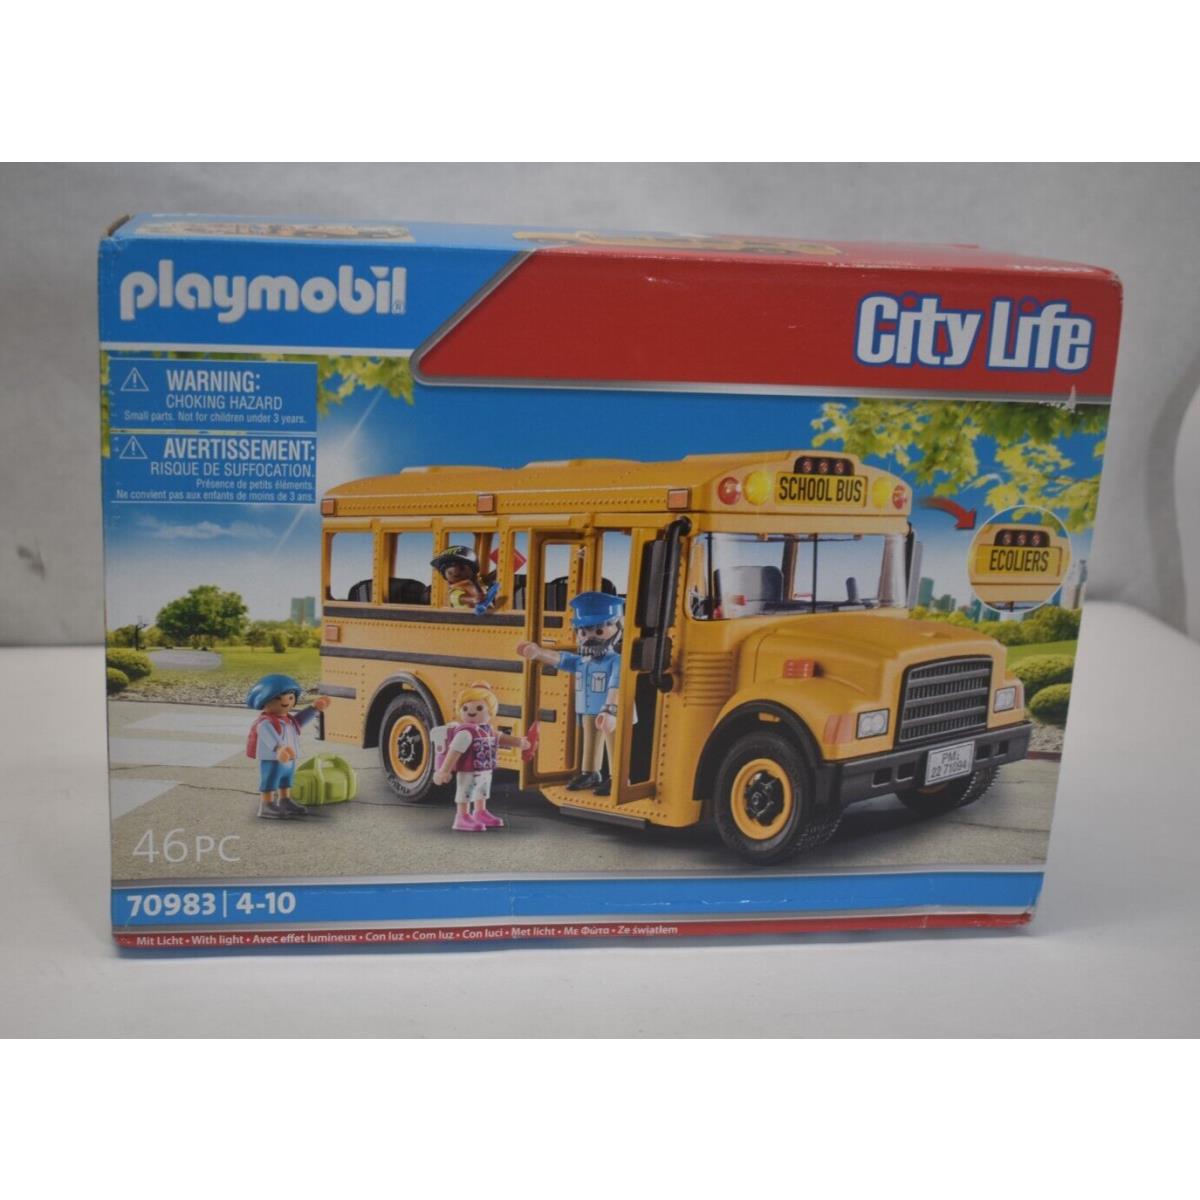 Playmobil 70983 - City Life School Bus - Playmobil - Toys / Play Sets